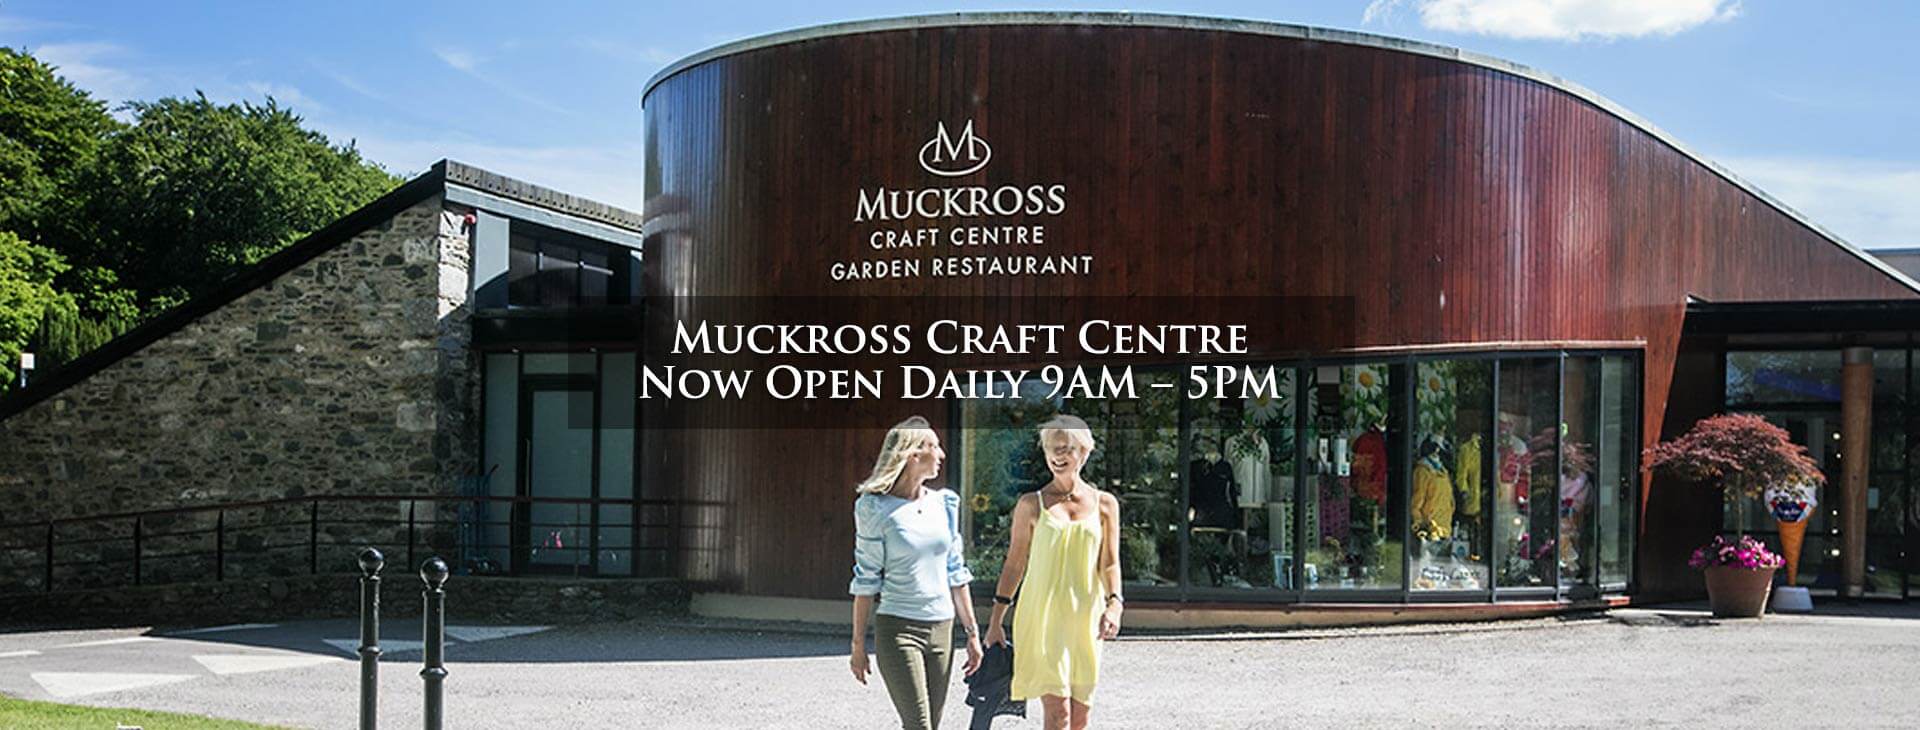 muckross craft centre